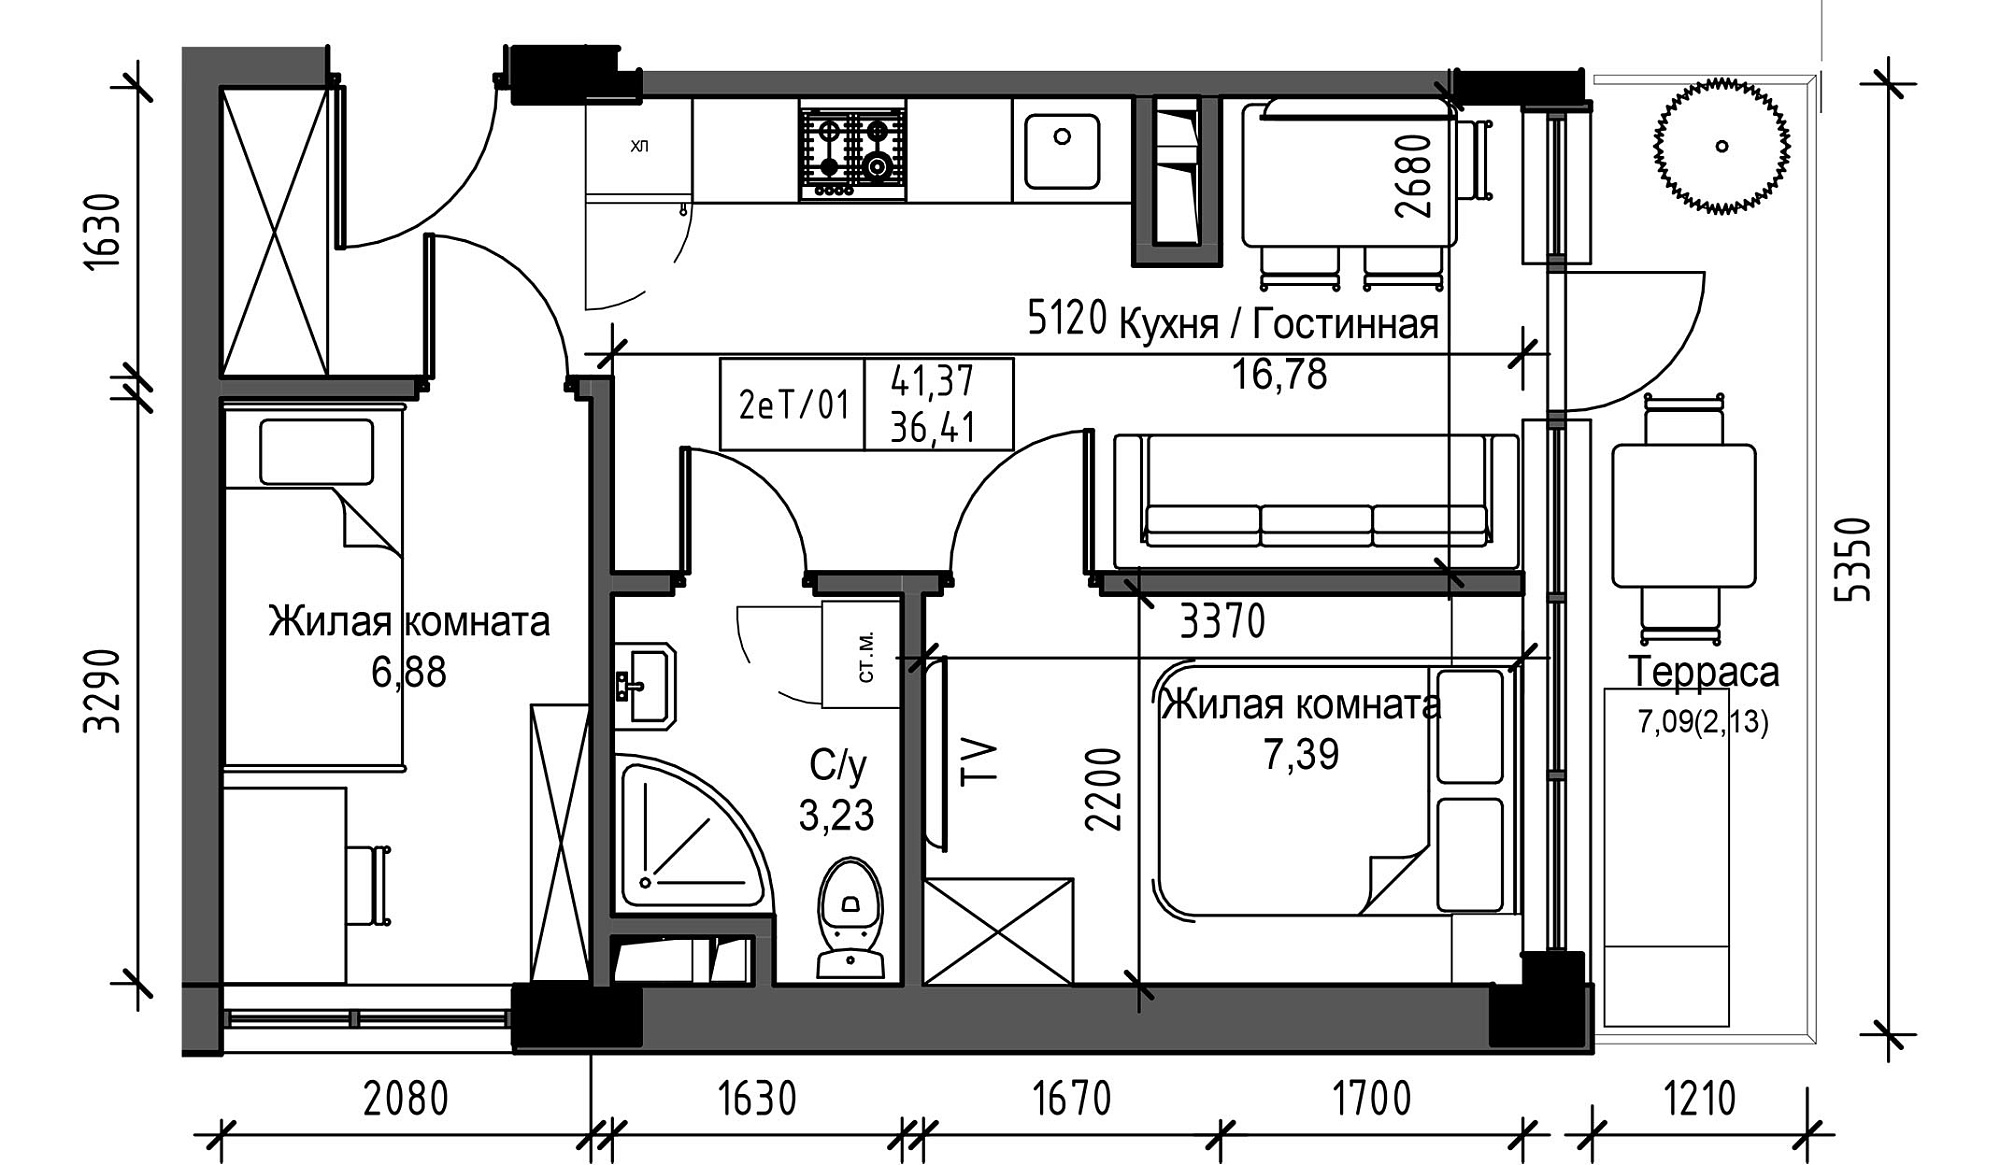 Планування 2-к квартира площею 36.41м2, UM-003-07/0072.